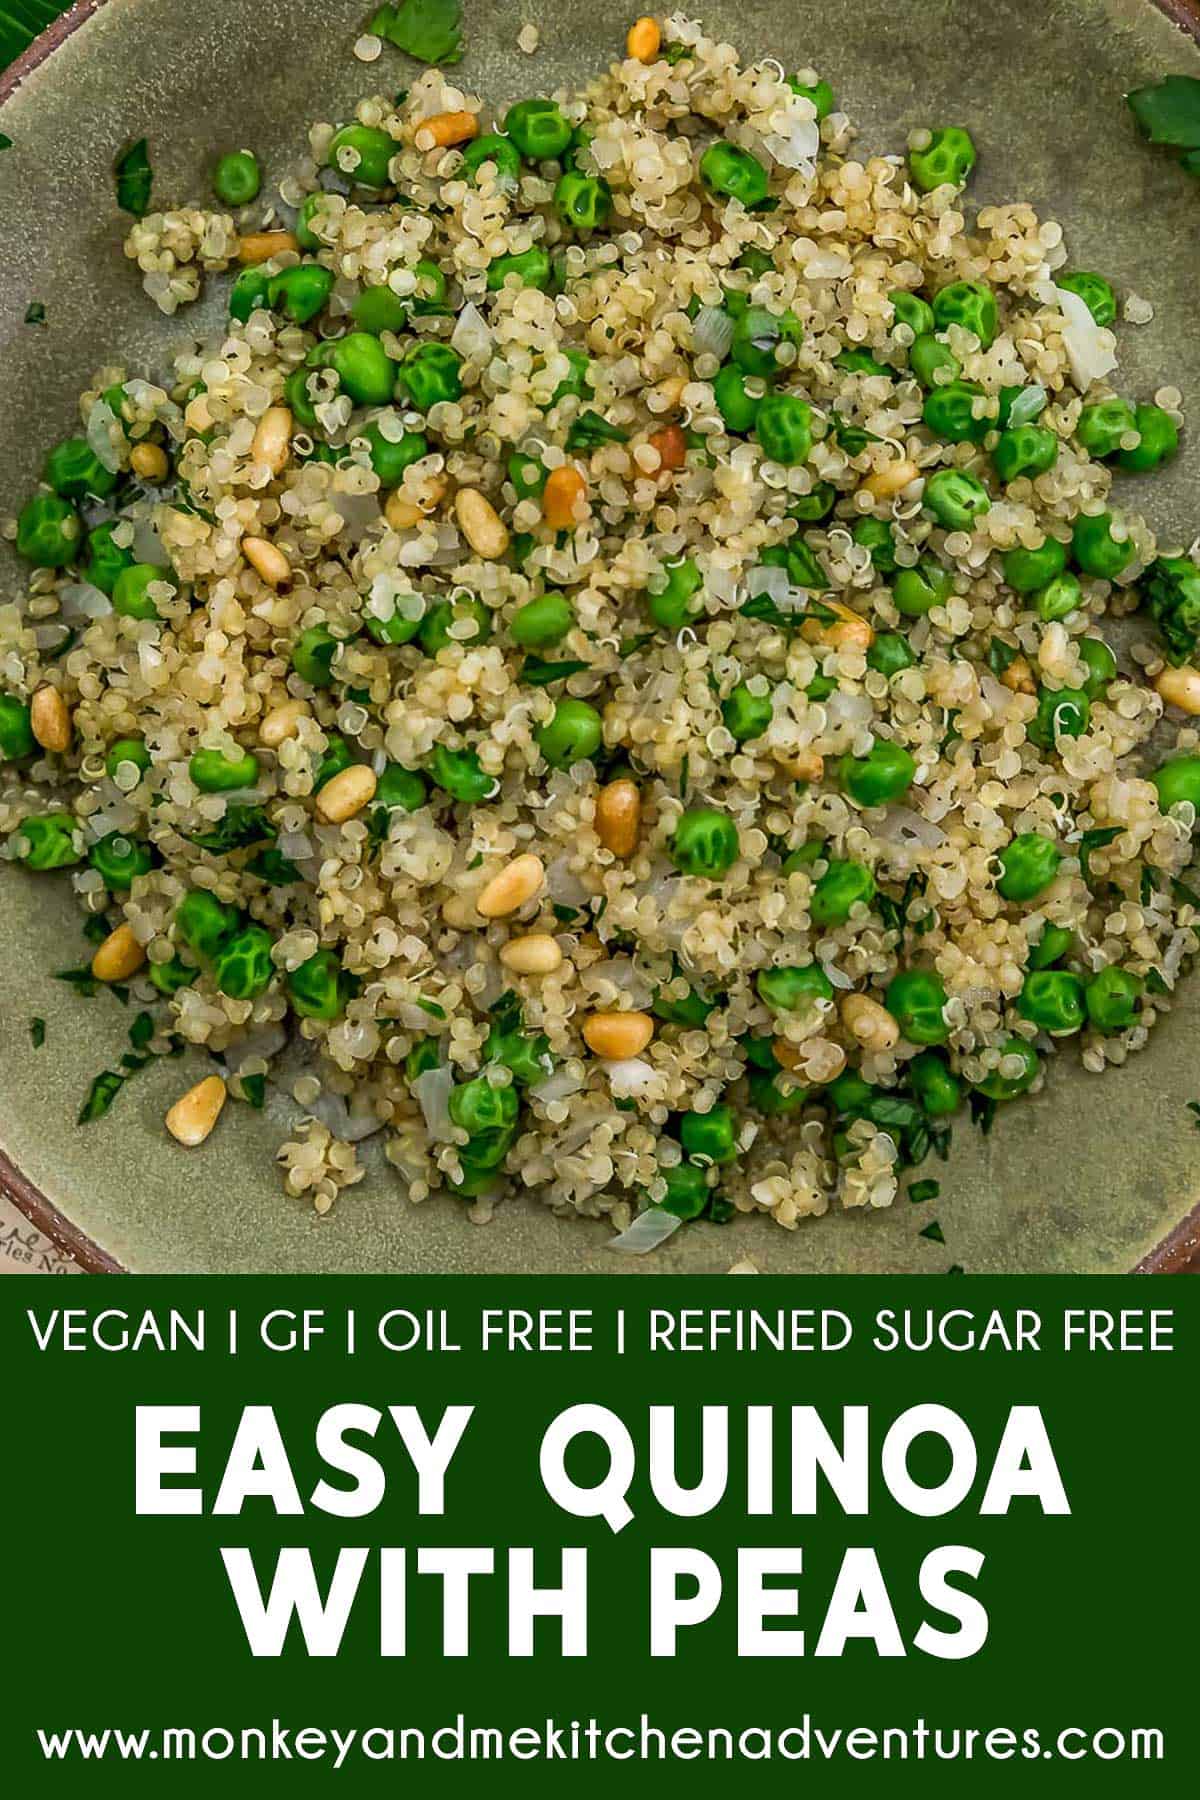 Easy Quinoa with Peas with text description